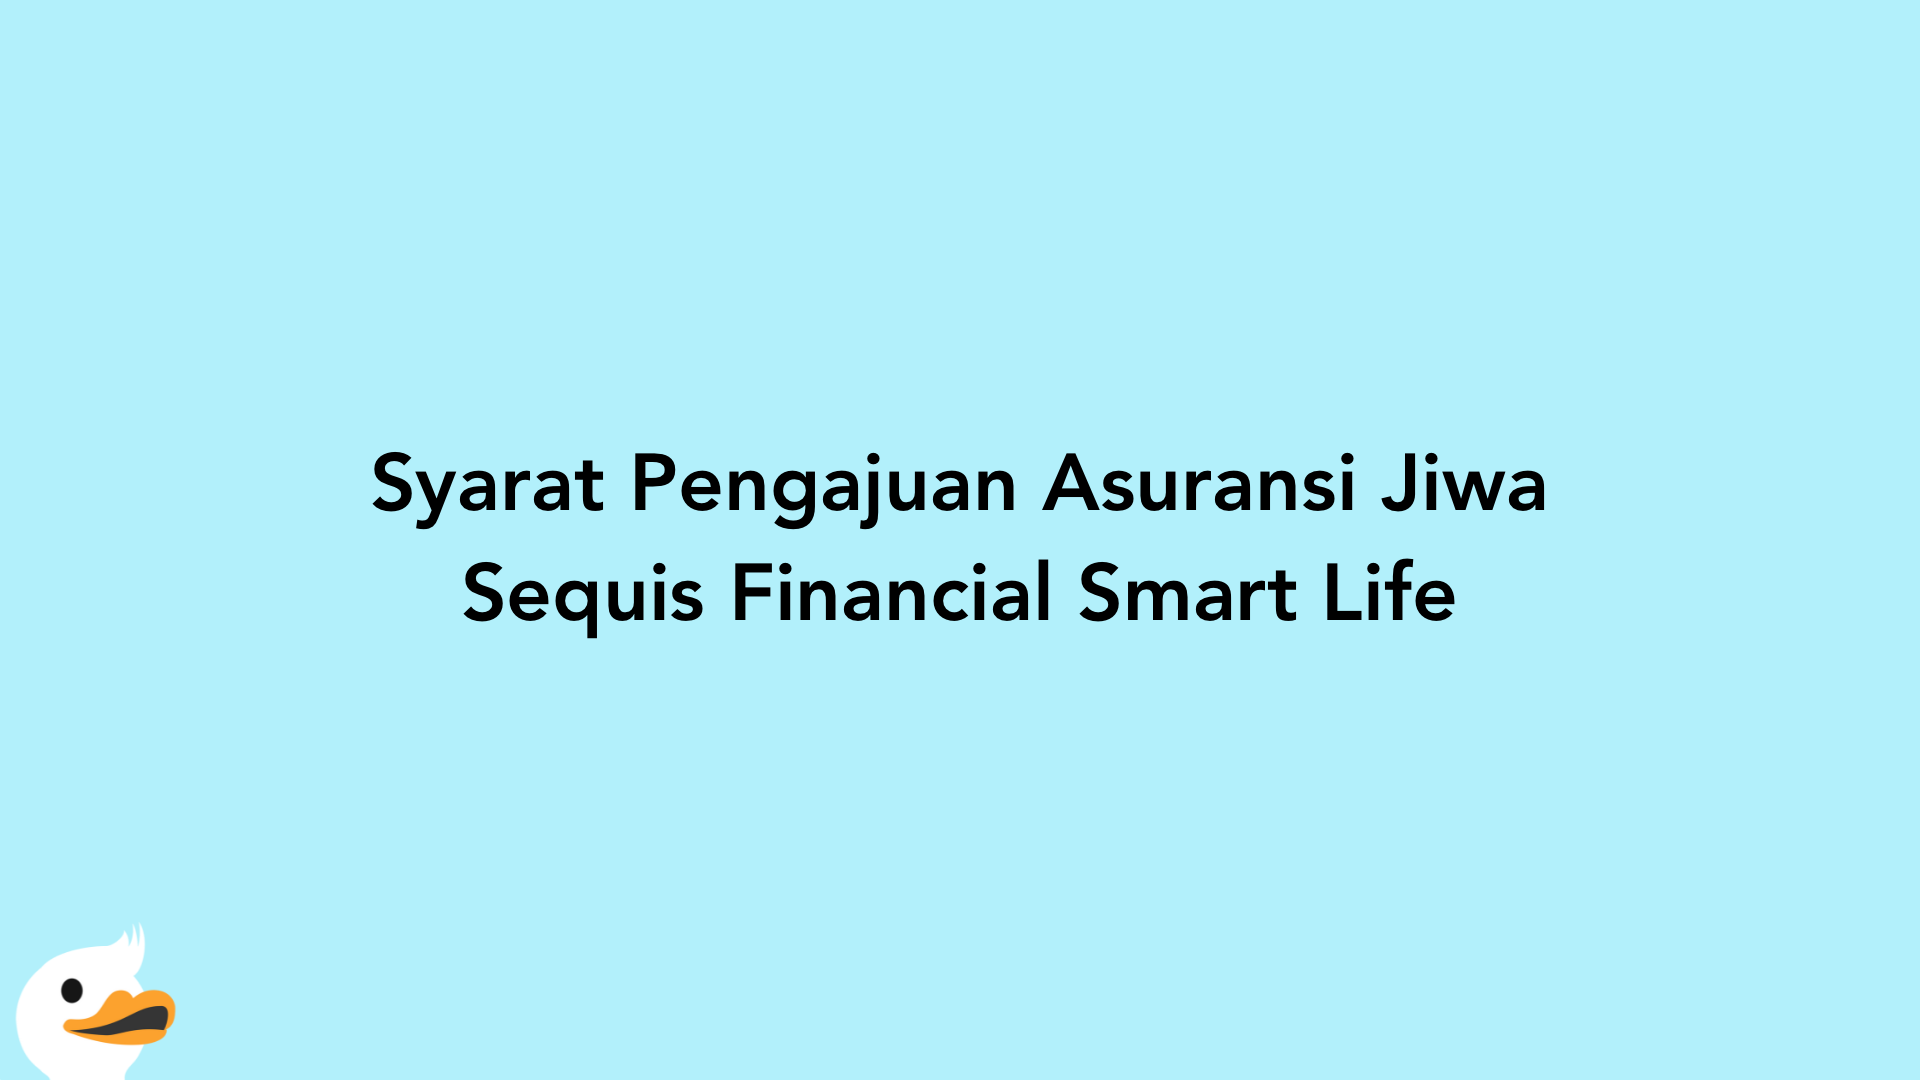 Syarat Pengajuan Asuransi Jiwa Sequis Financial Smart Life